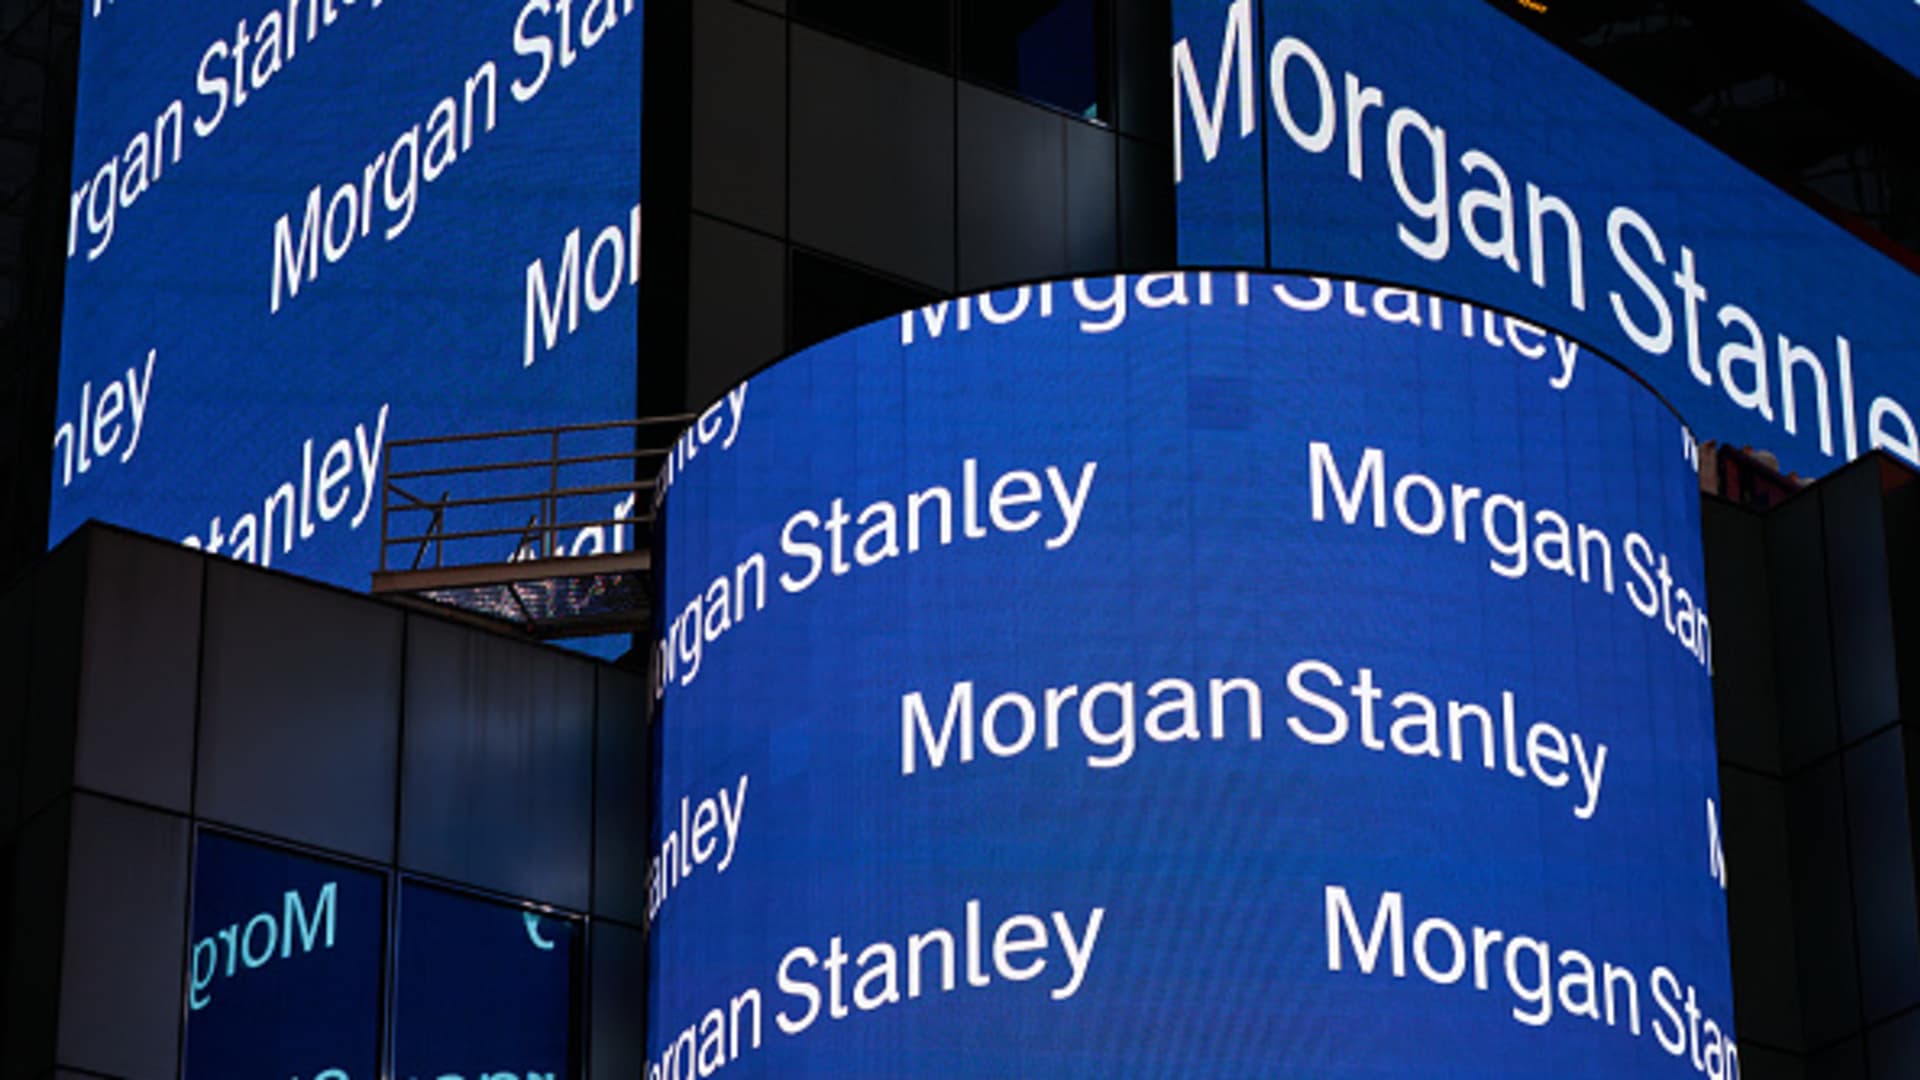 Consider Best Buy, Constellation Brands; prepare for Morgan Stanley earnings - CNBC